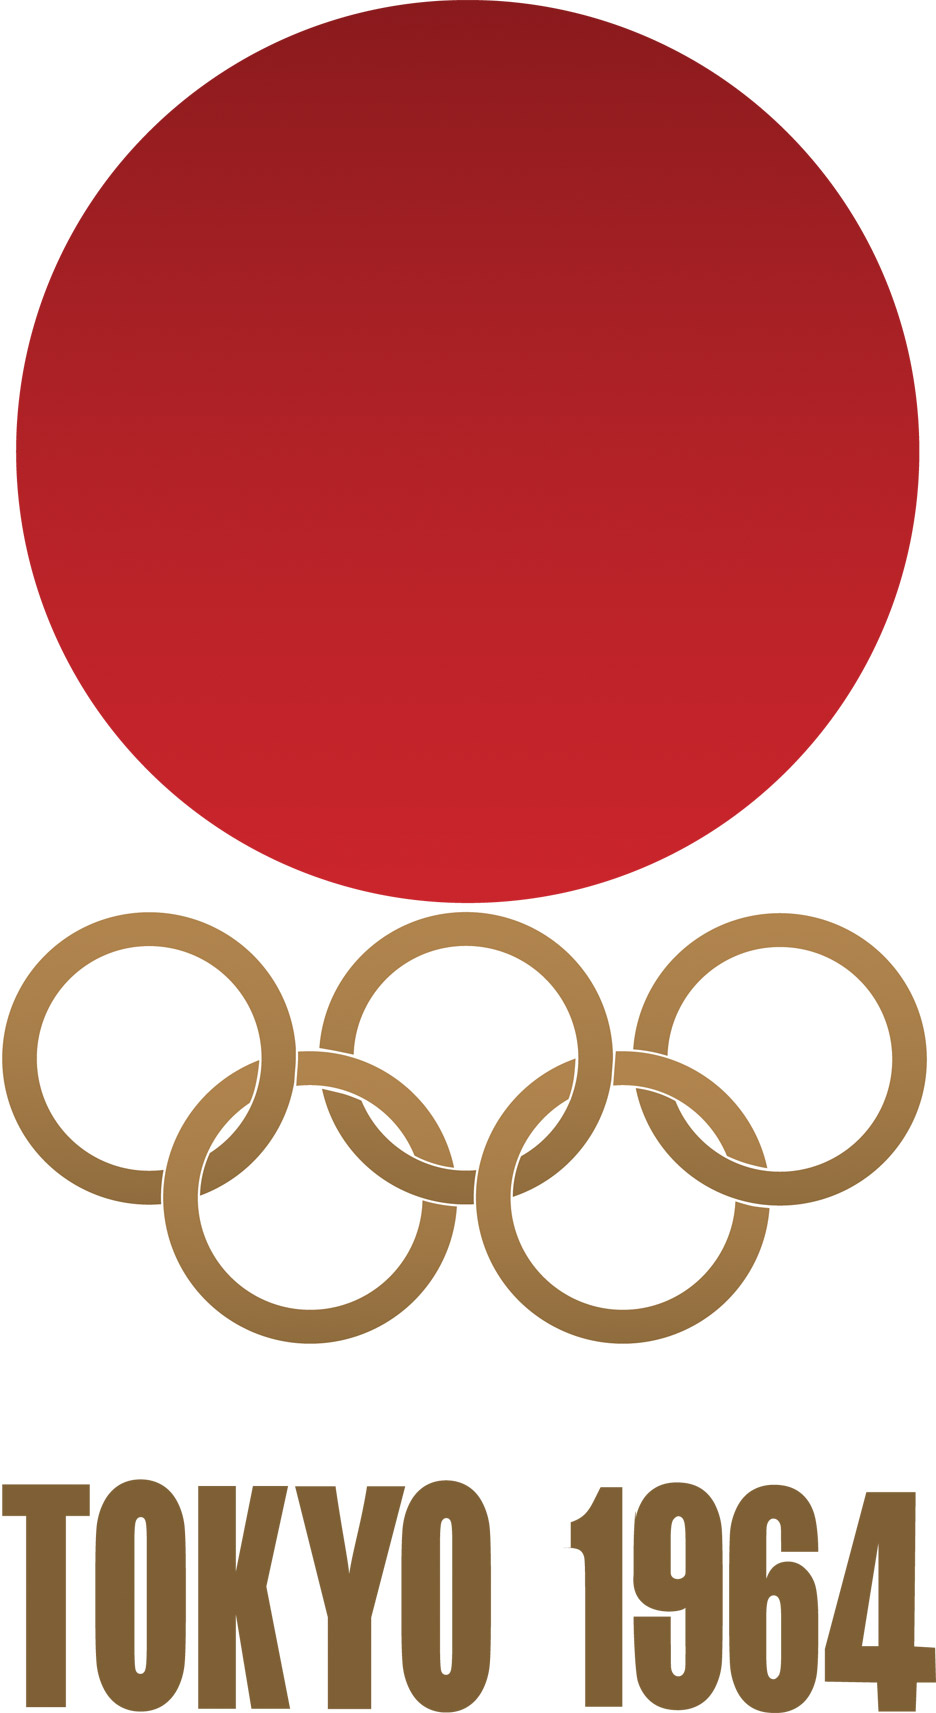 Logo of the 1964 Tokyo Olympics